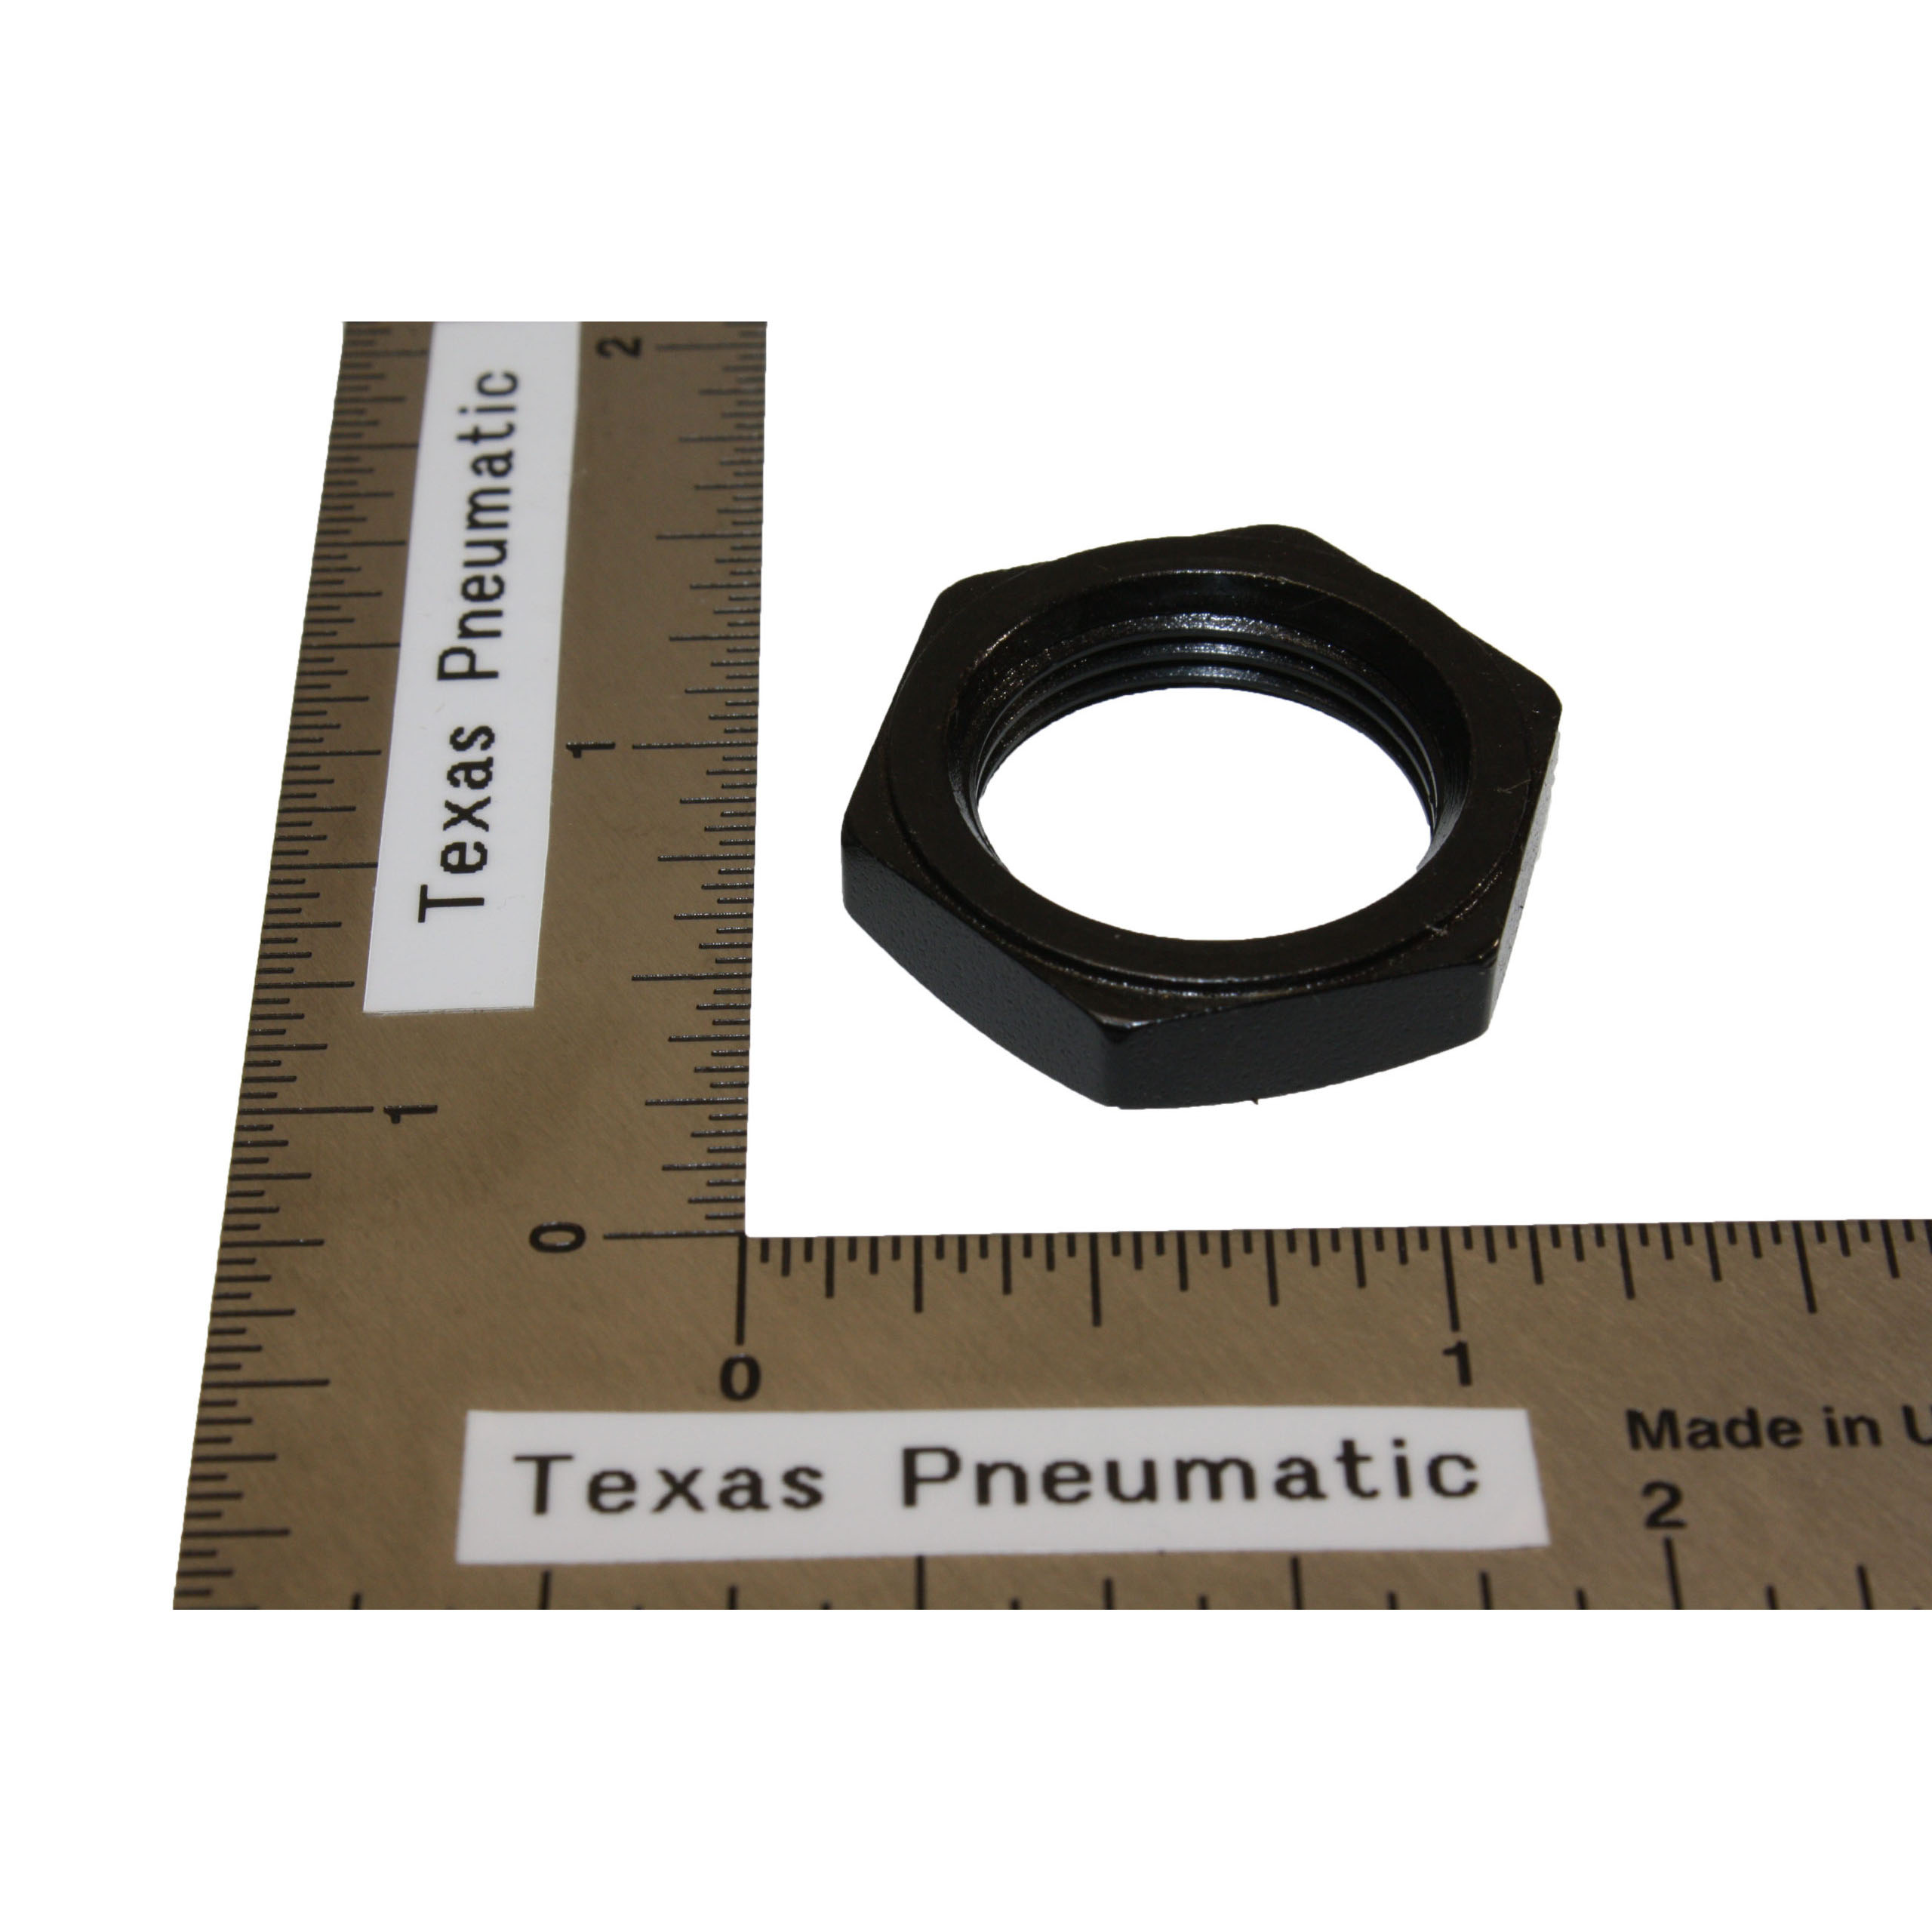 Texas Pneumatic Tools TX1B Needle Scaler - Lever Throttle